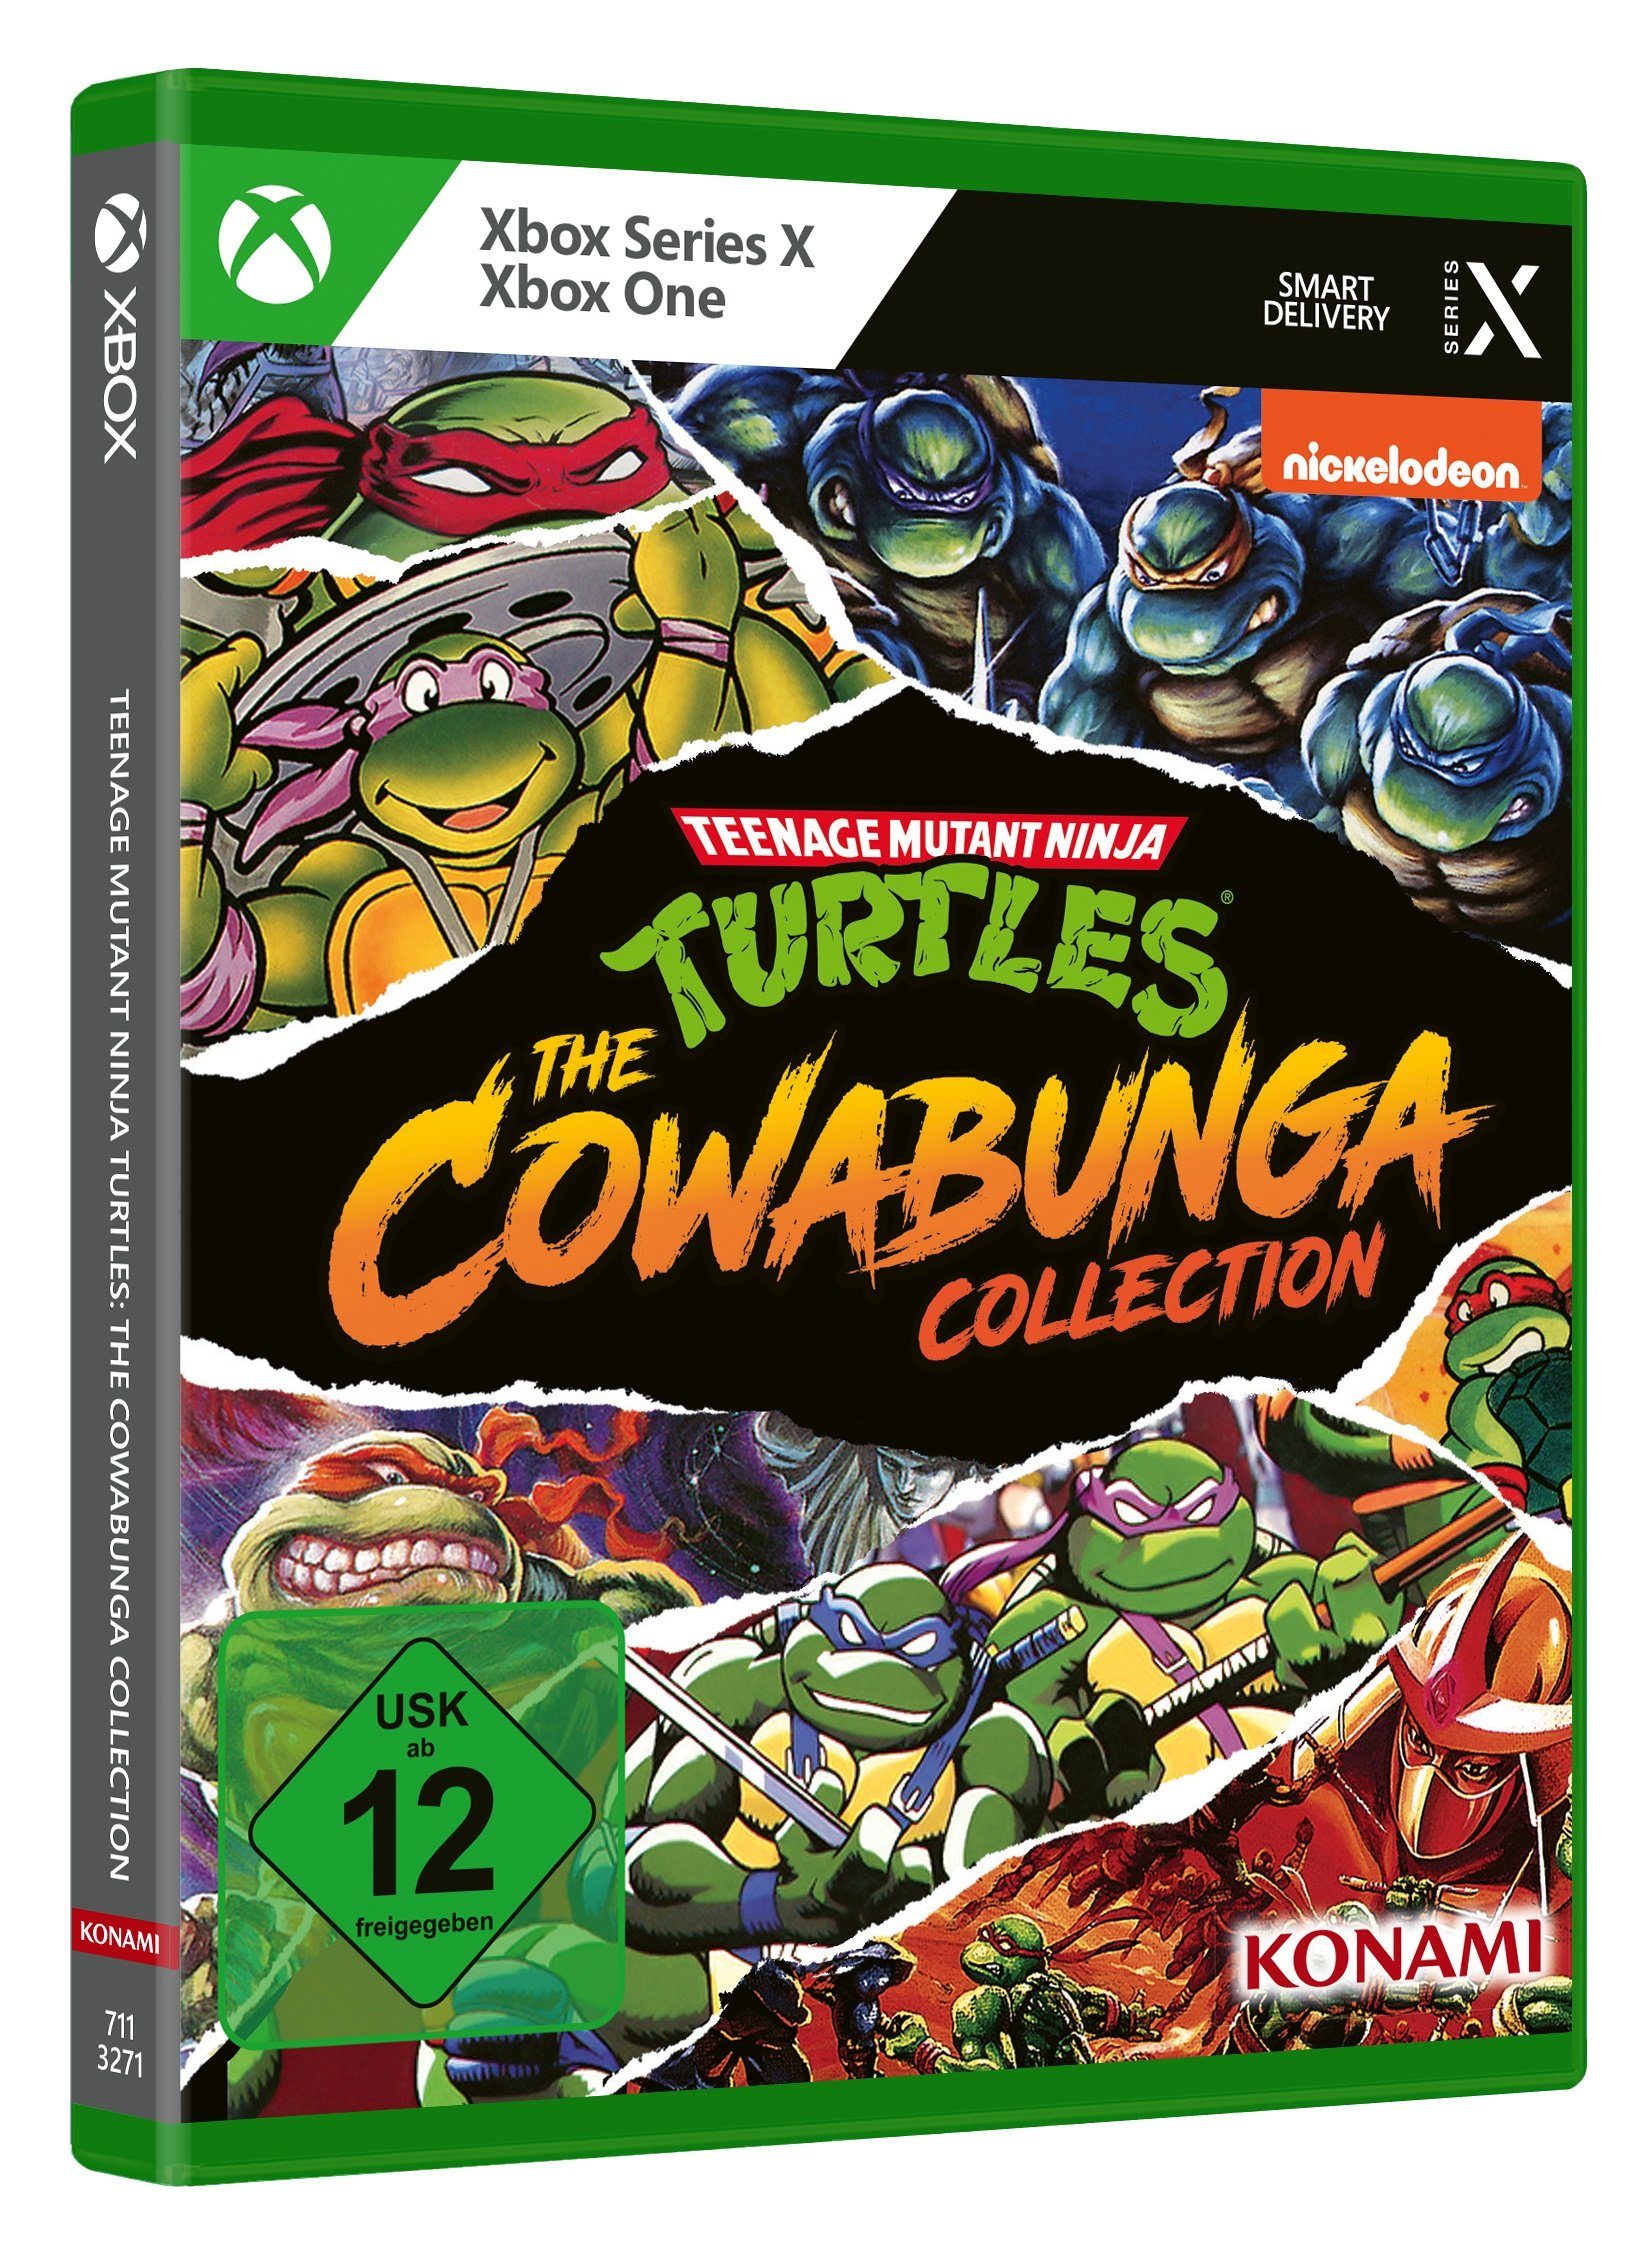 Konami Teenage Mutant Ninja Turtles Collection One, Cowabunga Xbox X The - Xbox Series